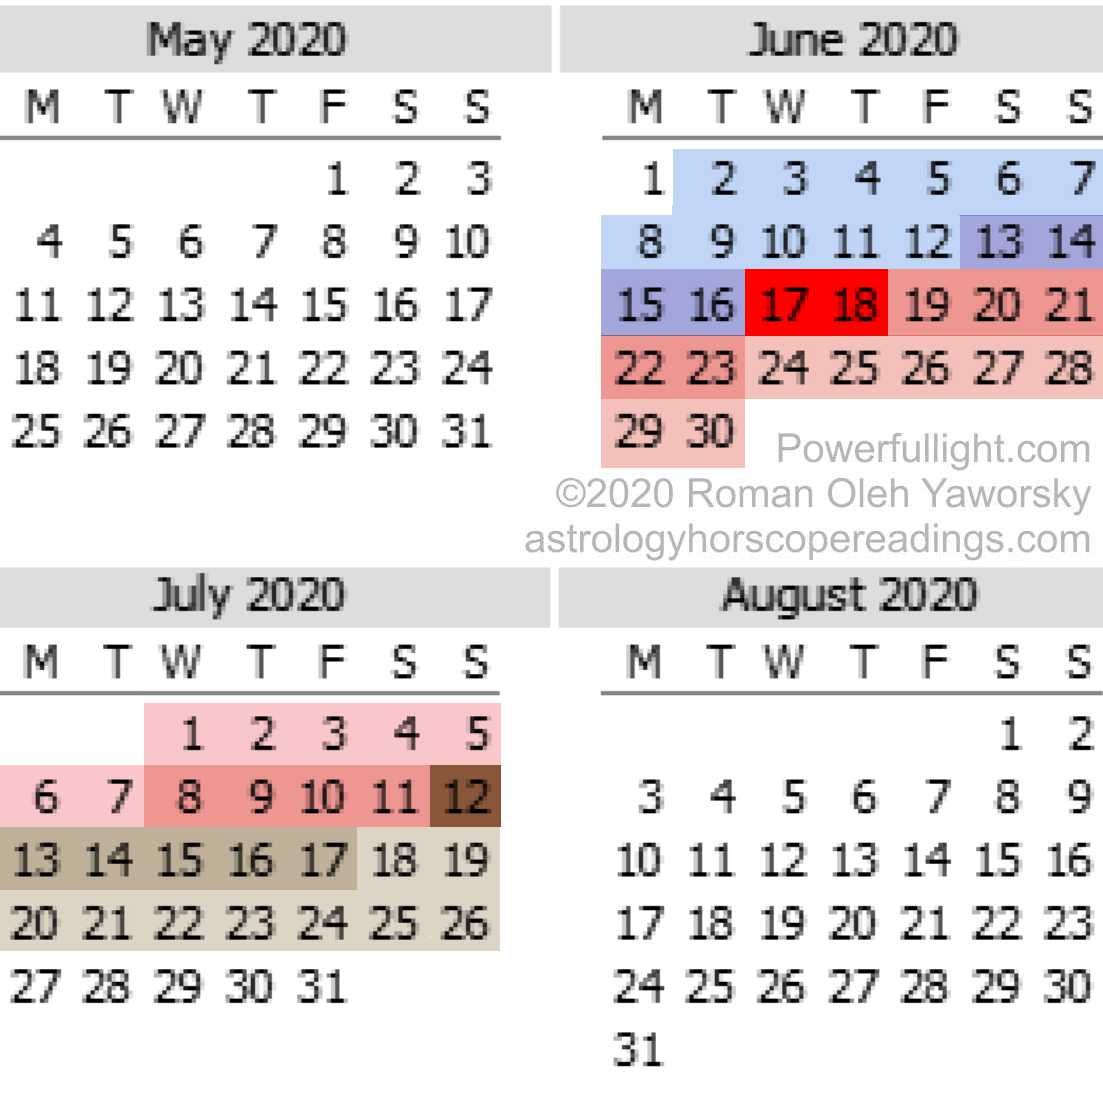 Mercury Retrograde Calendar, May to August 2020.  Copyright 2020 by Roman Oleh Yaworsky, www.powerfullight.com